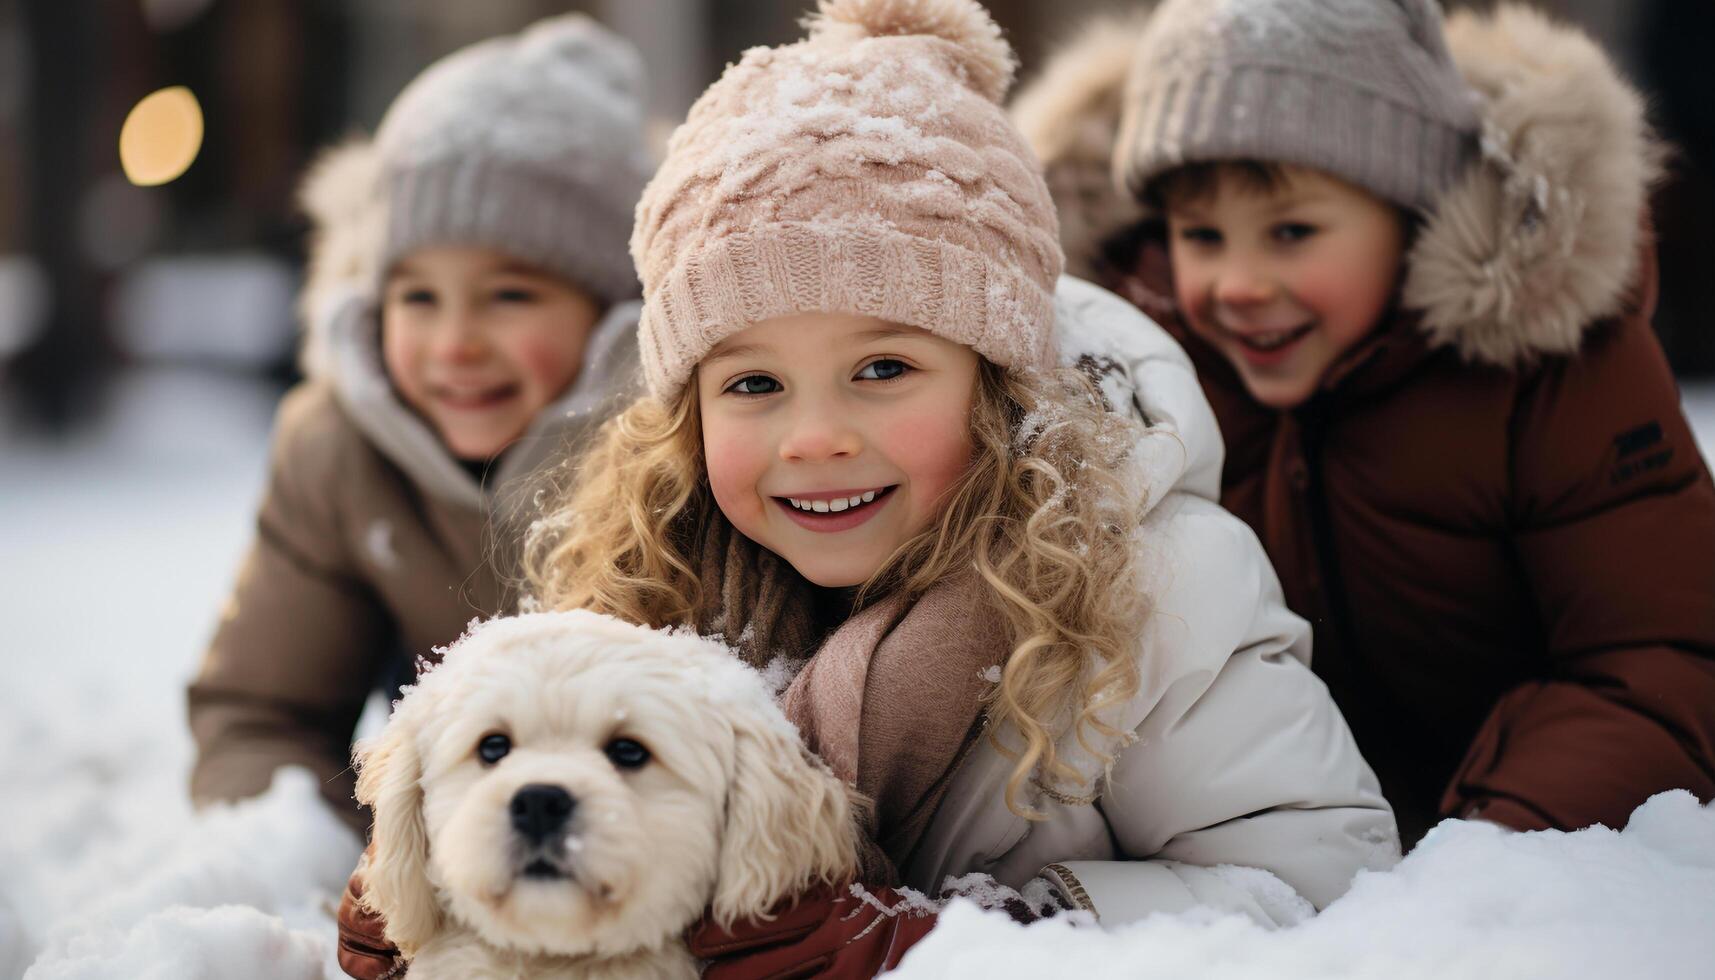 AI generated Smiling girls playing in snow, embracing dog, joyful winter fun generated by AI photo